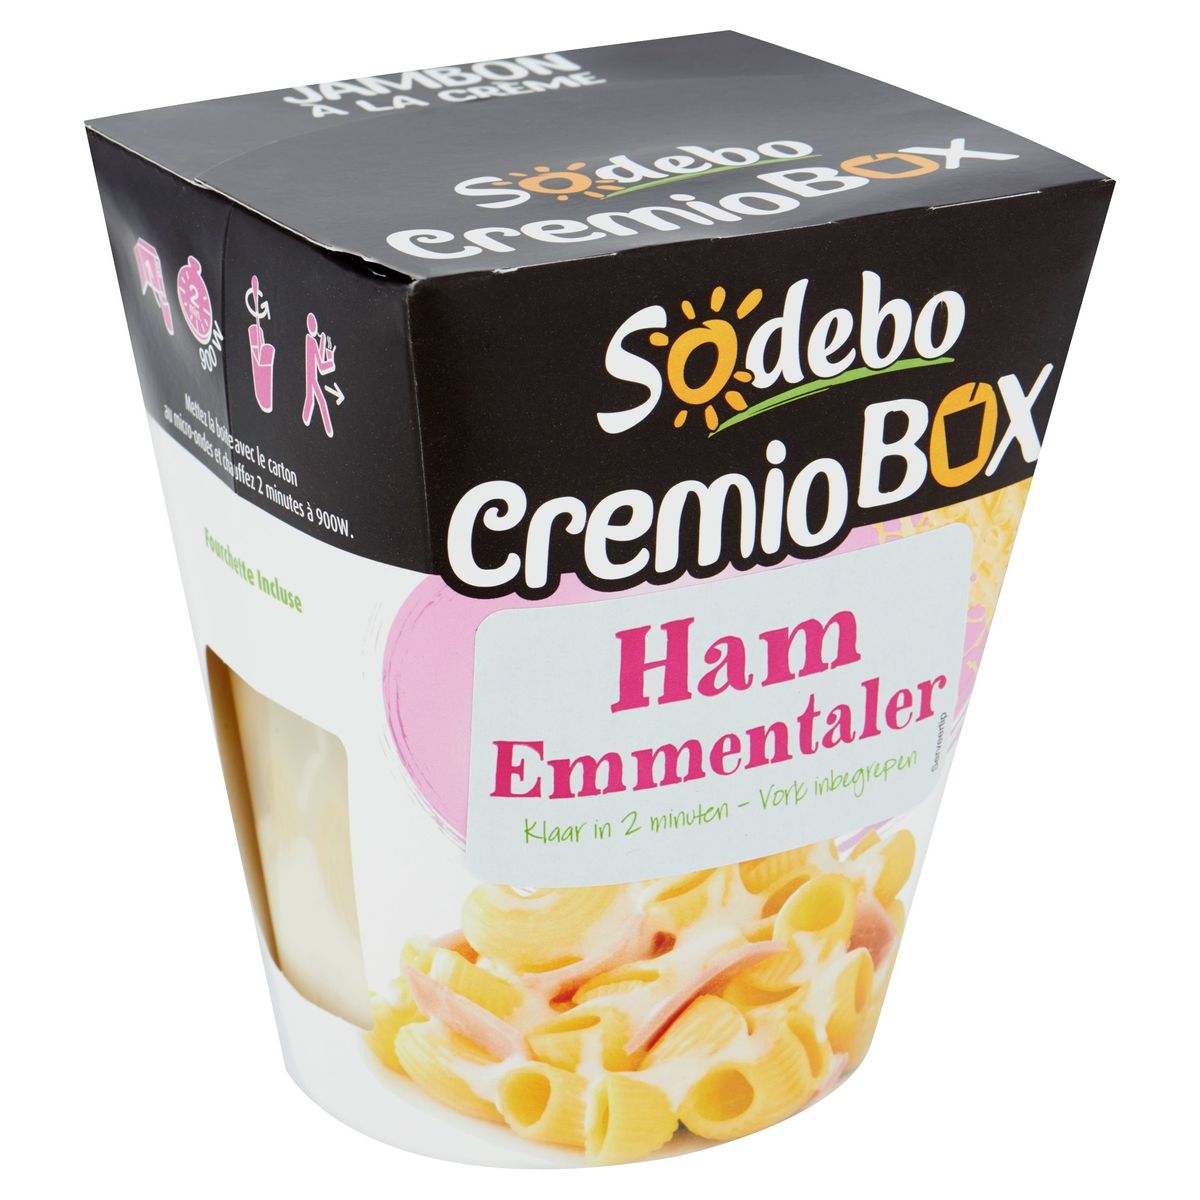 Sodebo CremioBox Ham met Emmentaler 280 g